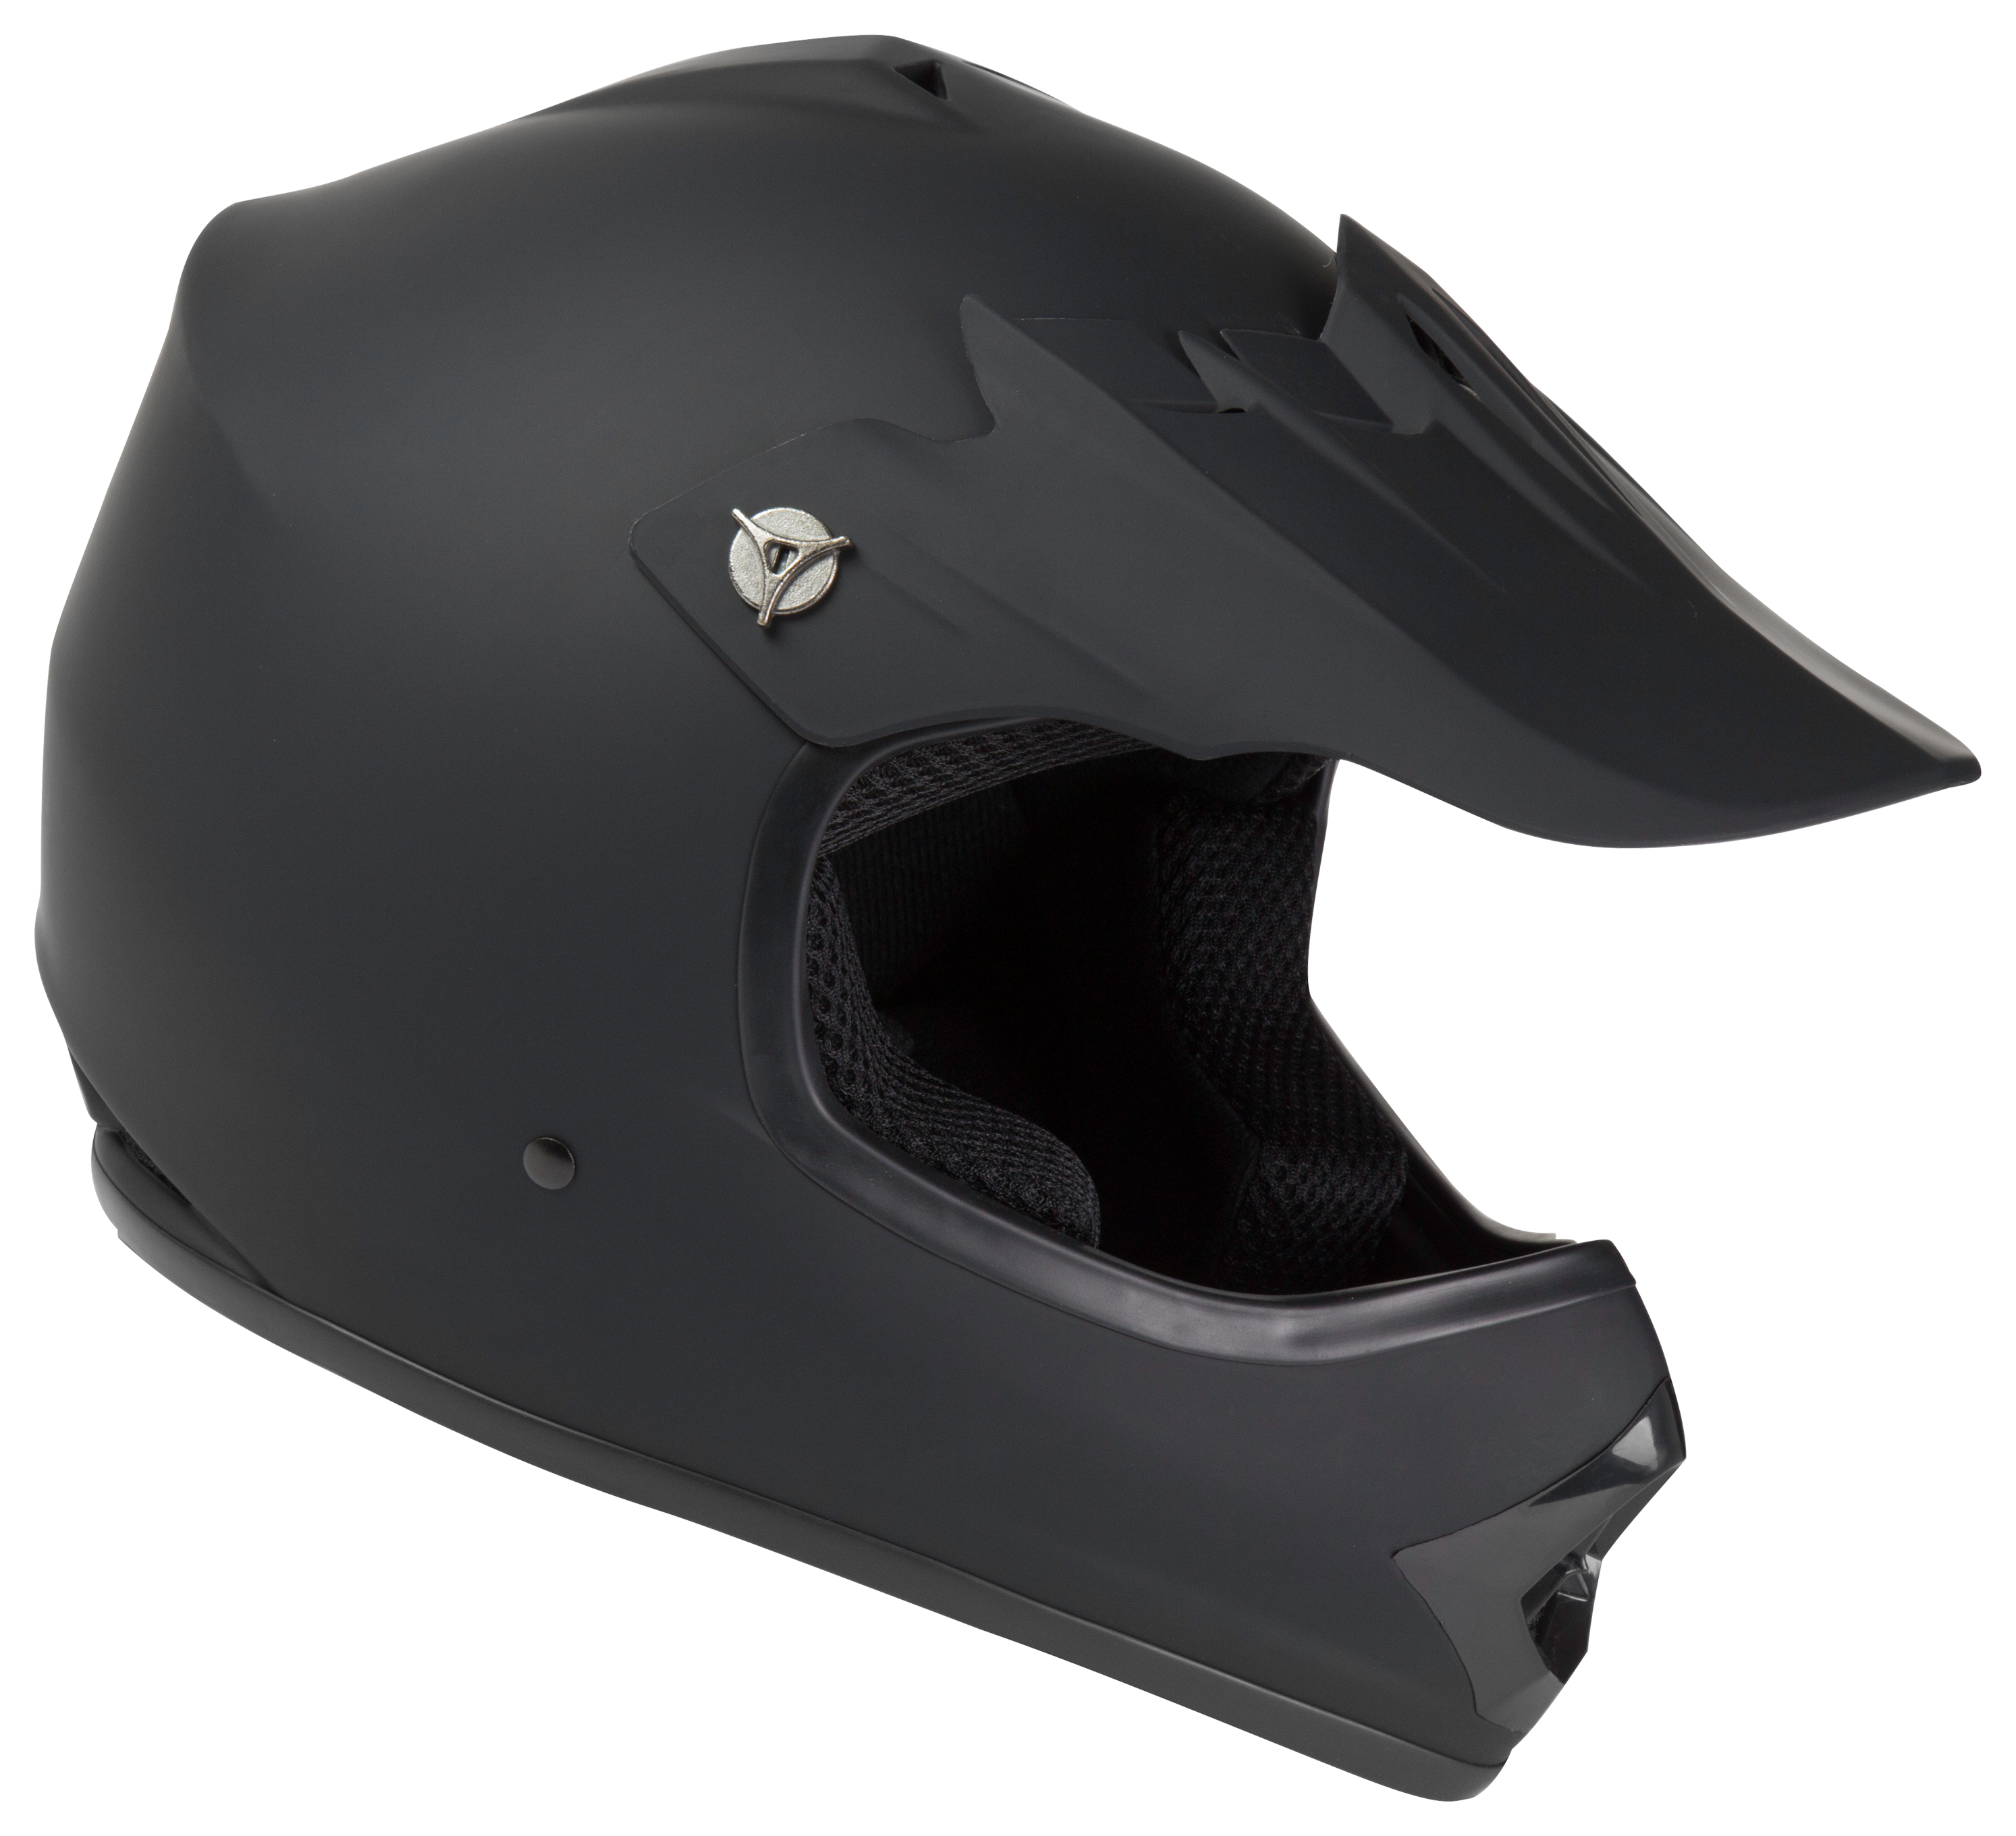 Raider GX3 MX Helmet for Youth